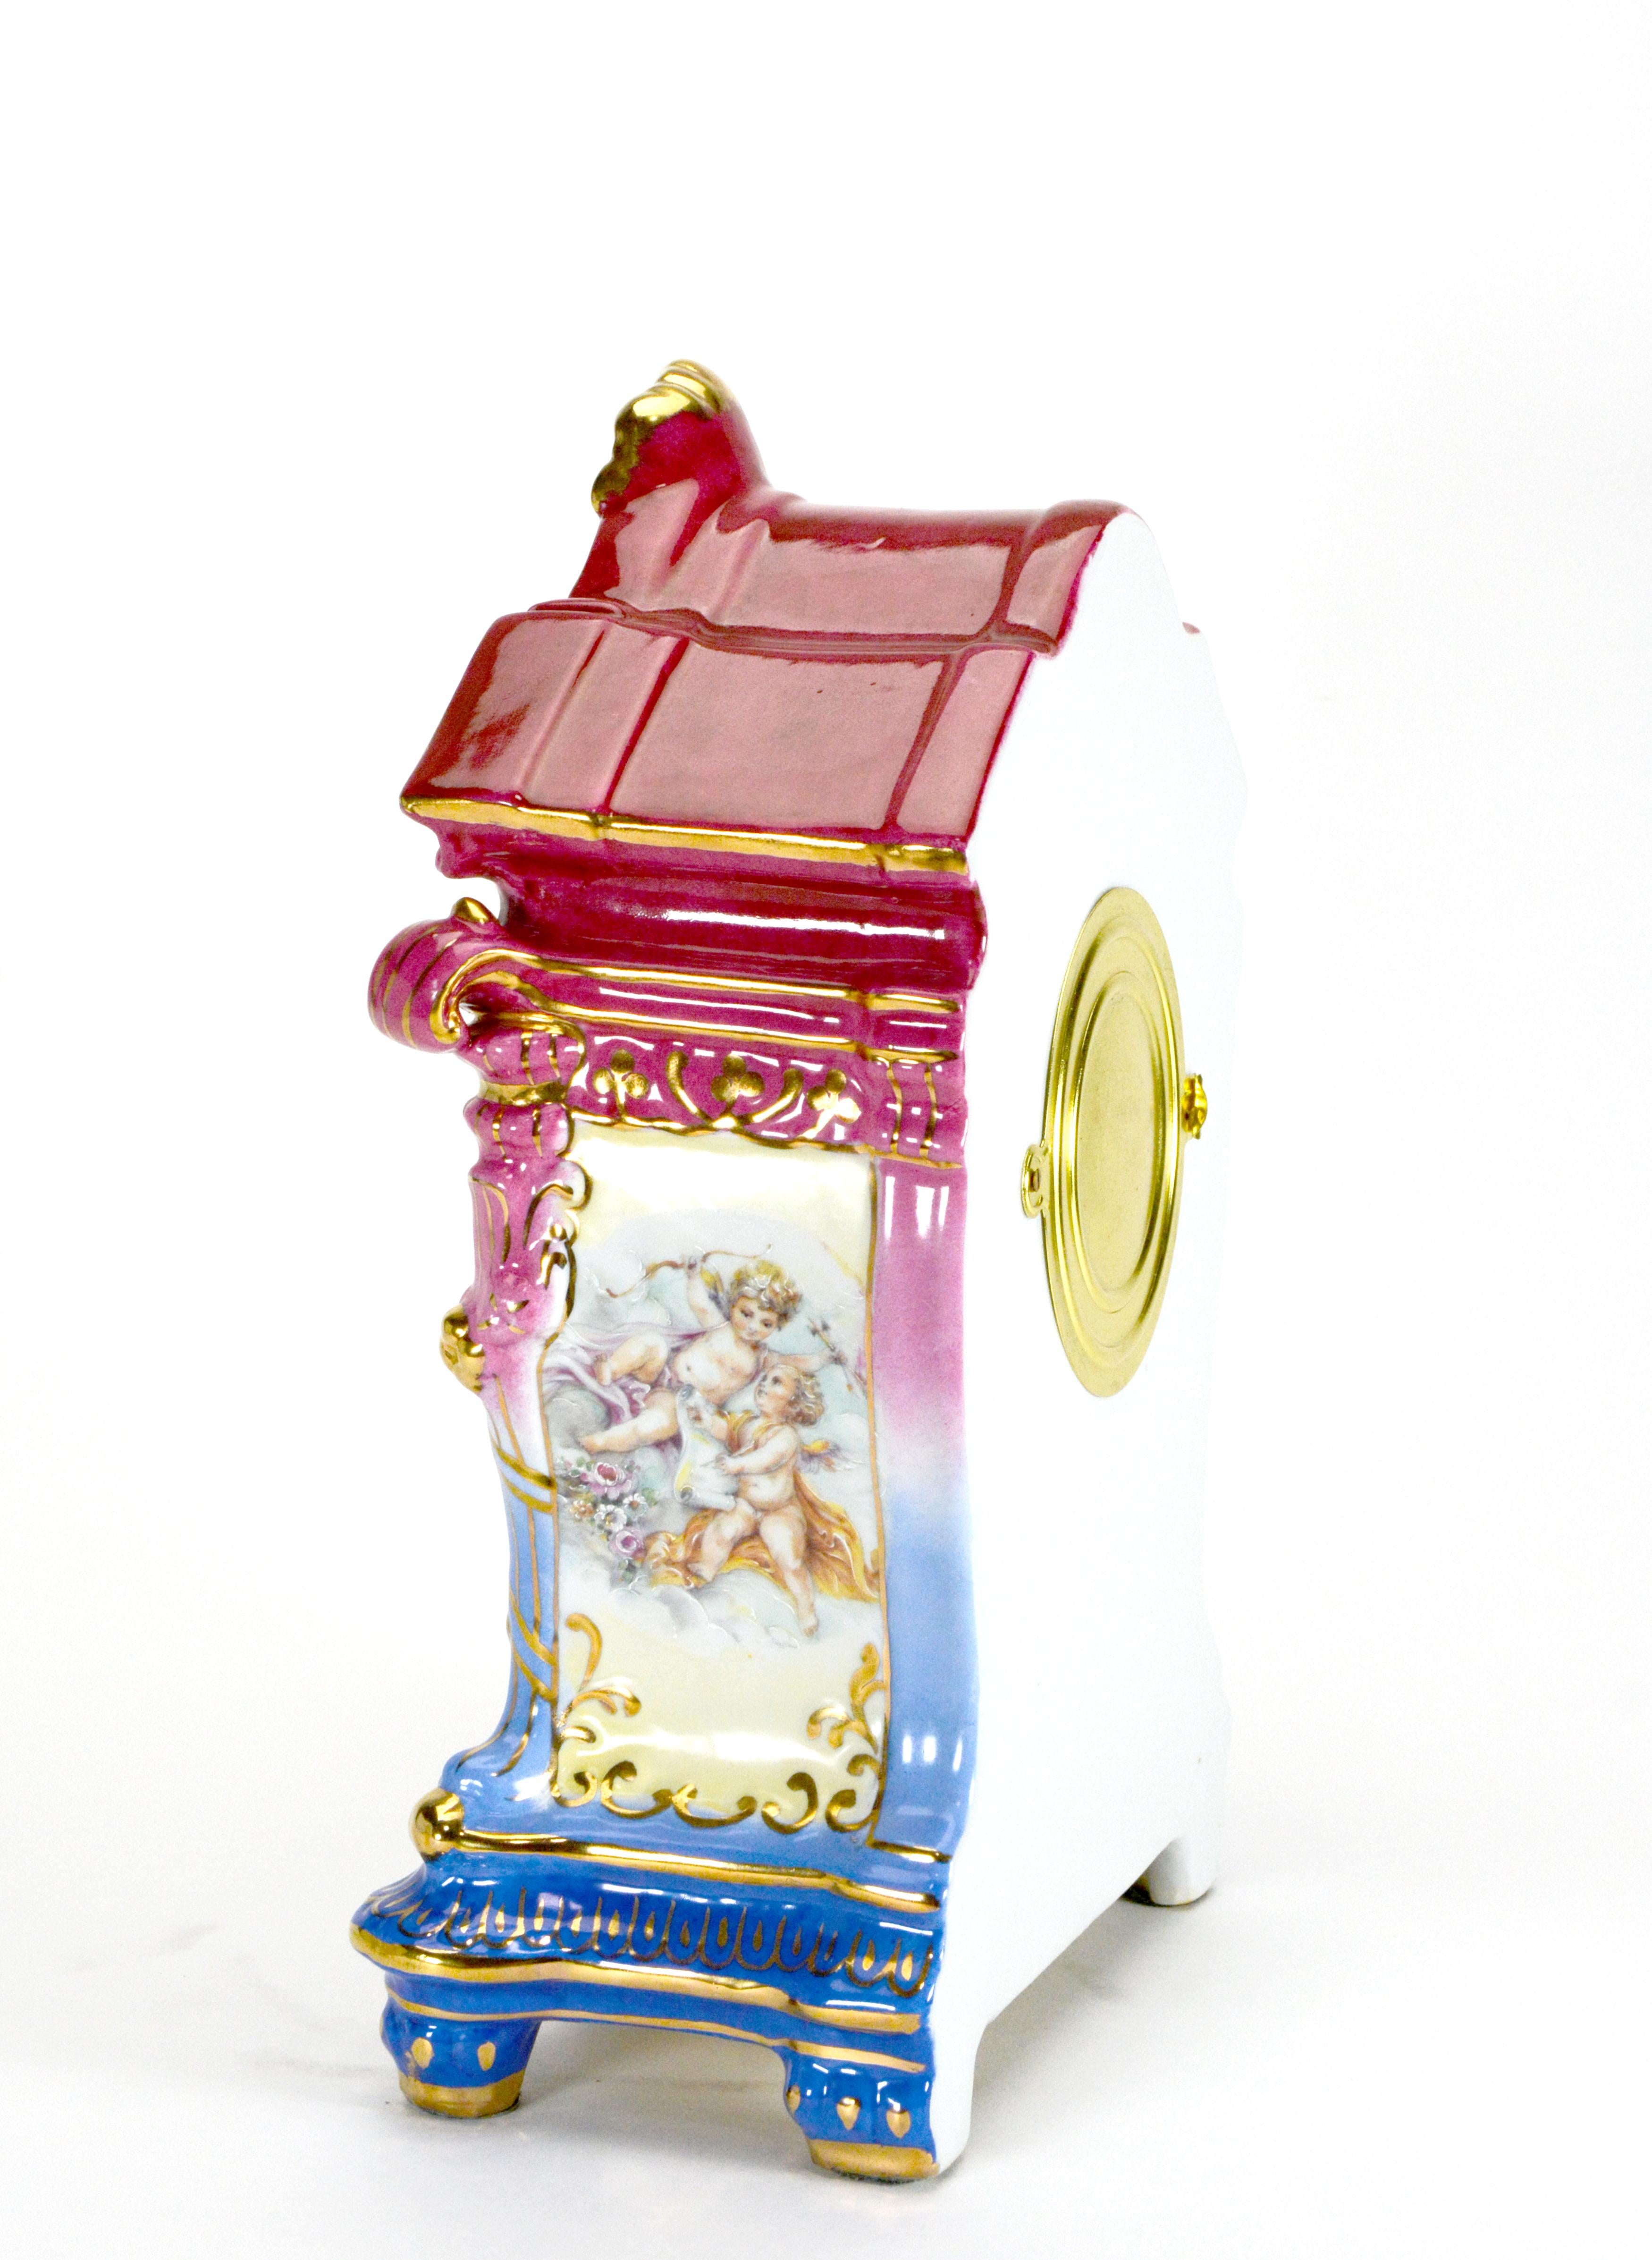 20th Century Ansonia Style Visible Escapement Pink & Blue Floral 24K Porcelain Mantle Clock For Sale